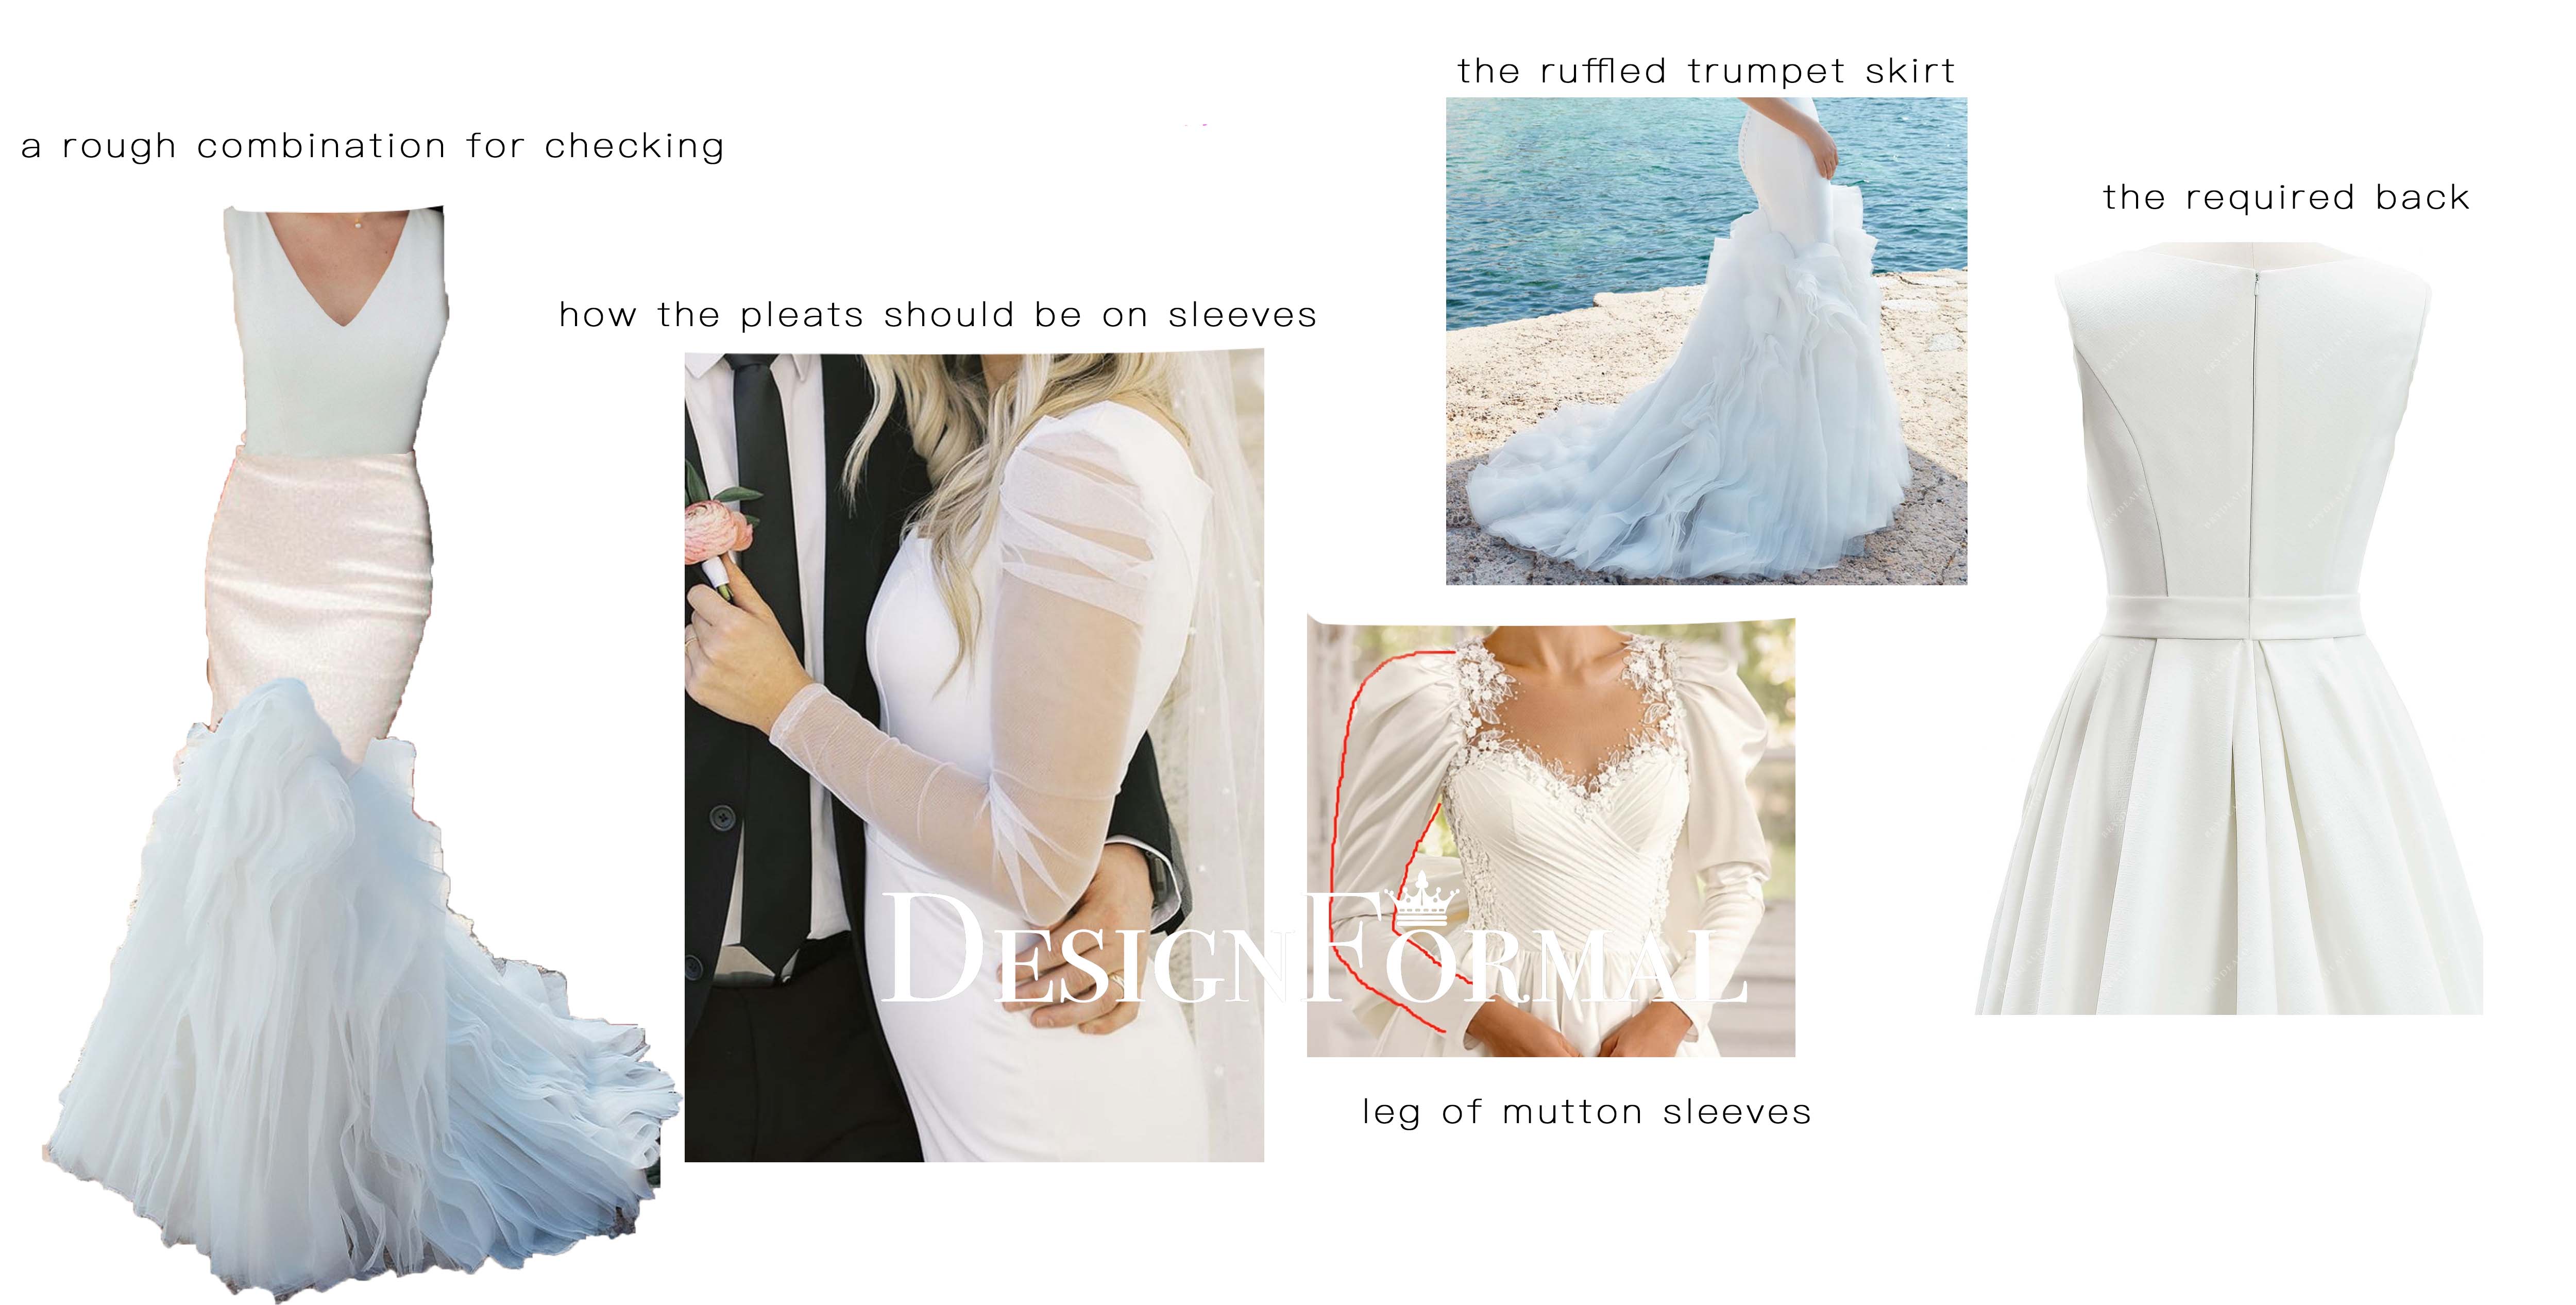 custom trumpet ruffled wedding dress design consulting